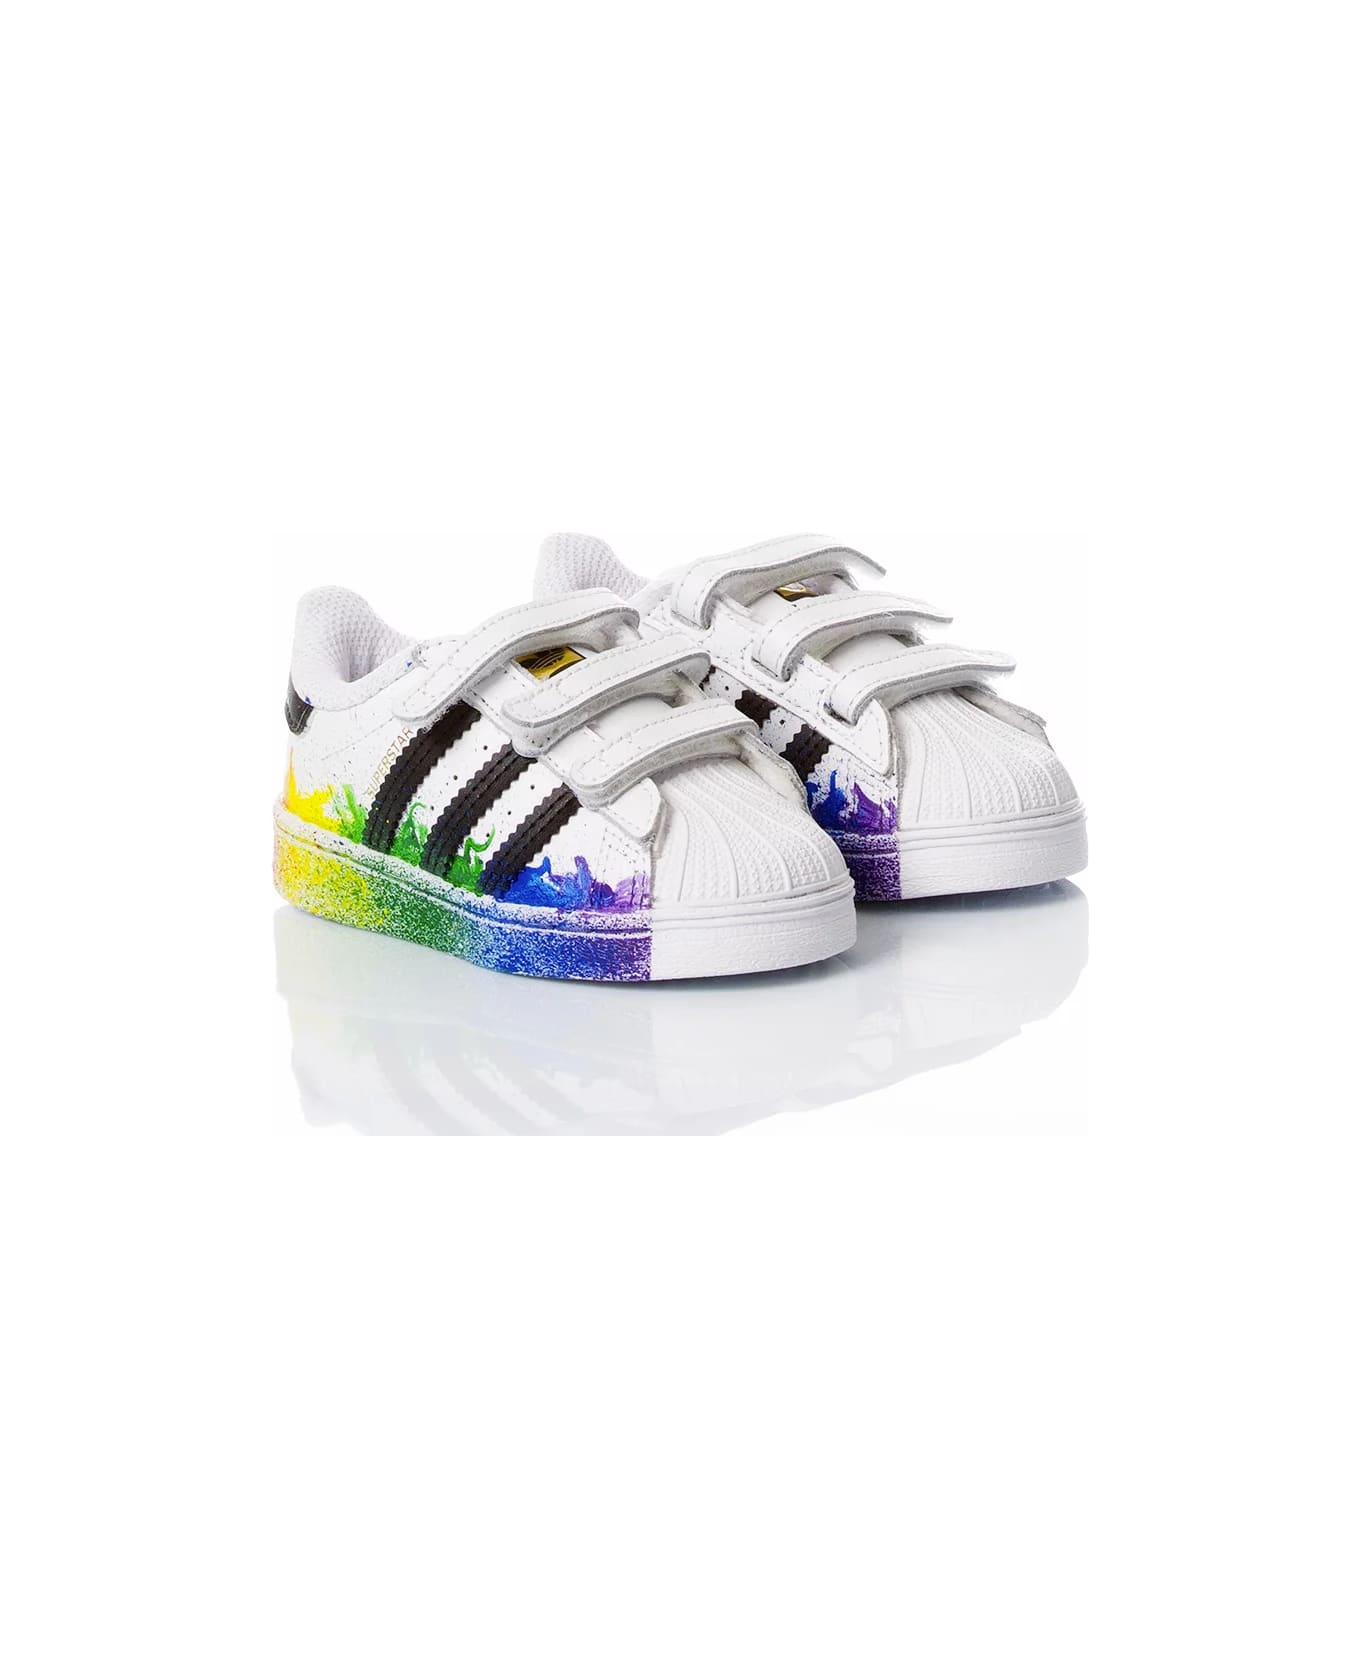 Mimanera Adidas Baby: Customize Your Little Shoe! シューズ